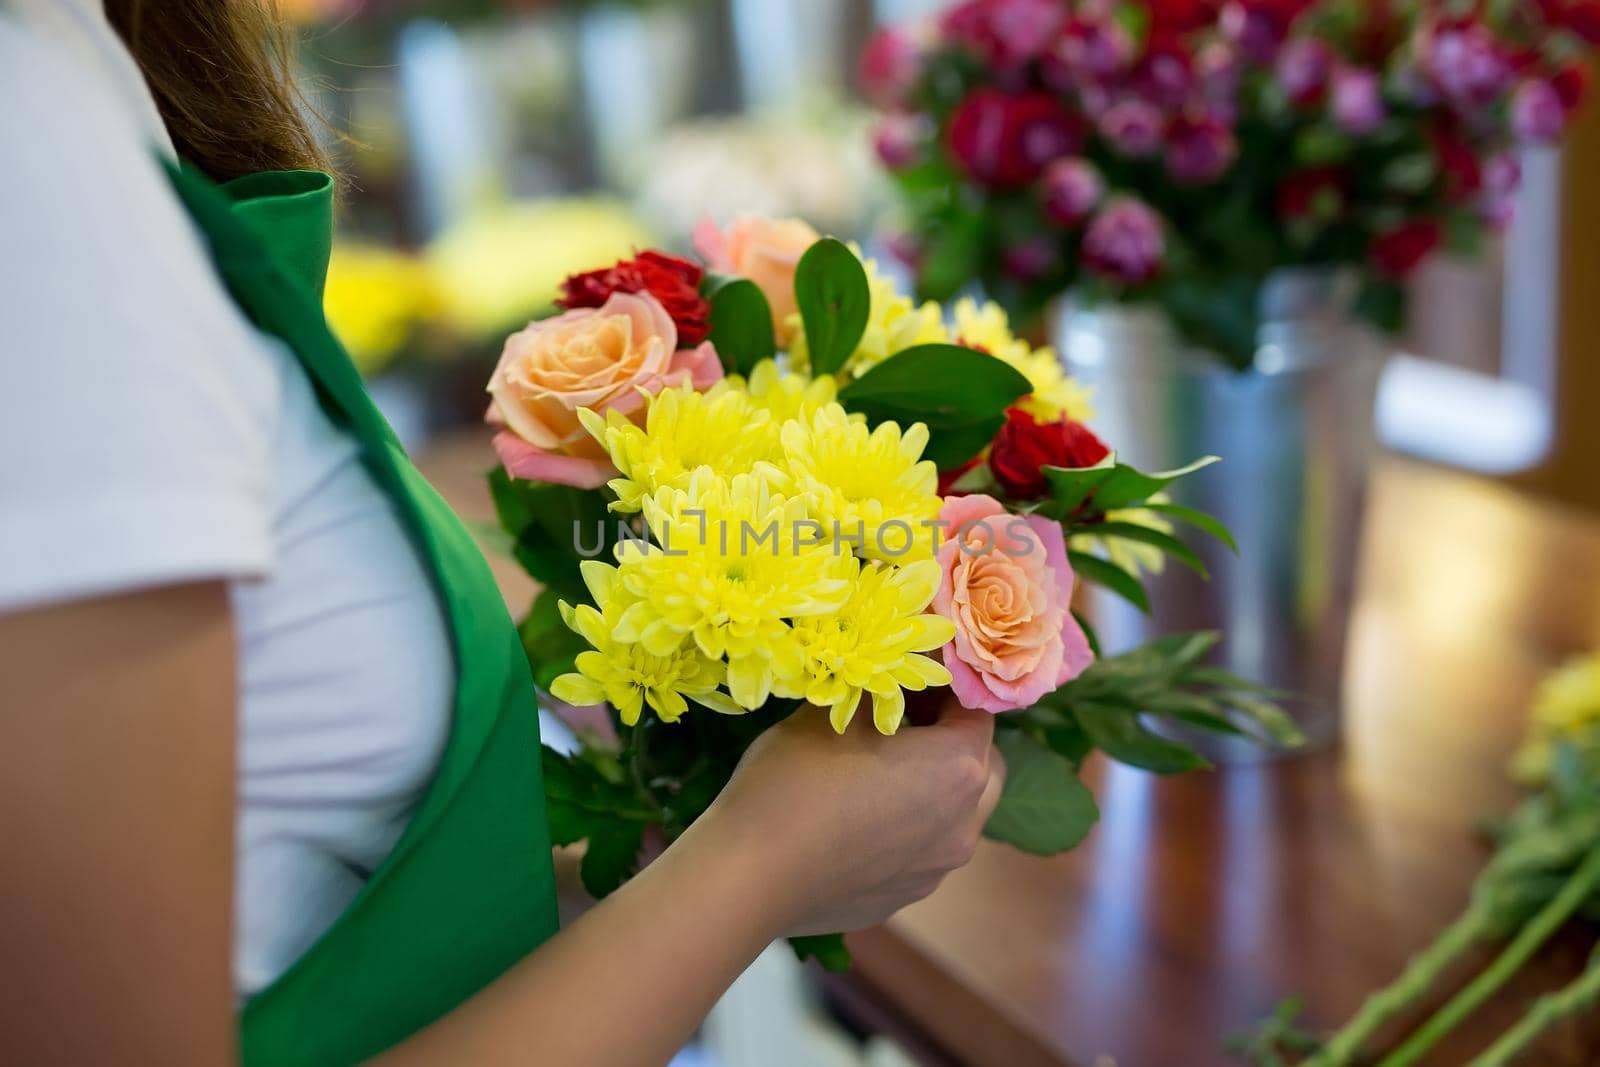 Workshop florist, making bouquets and flower arrangements. Woman collecting a bouquet of flowers